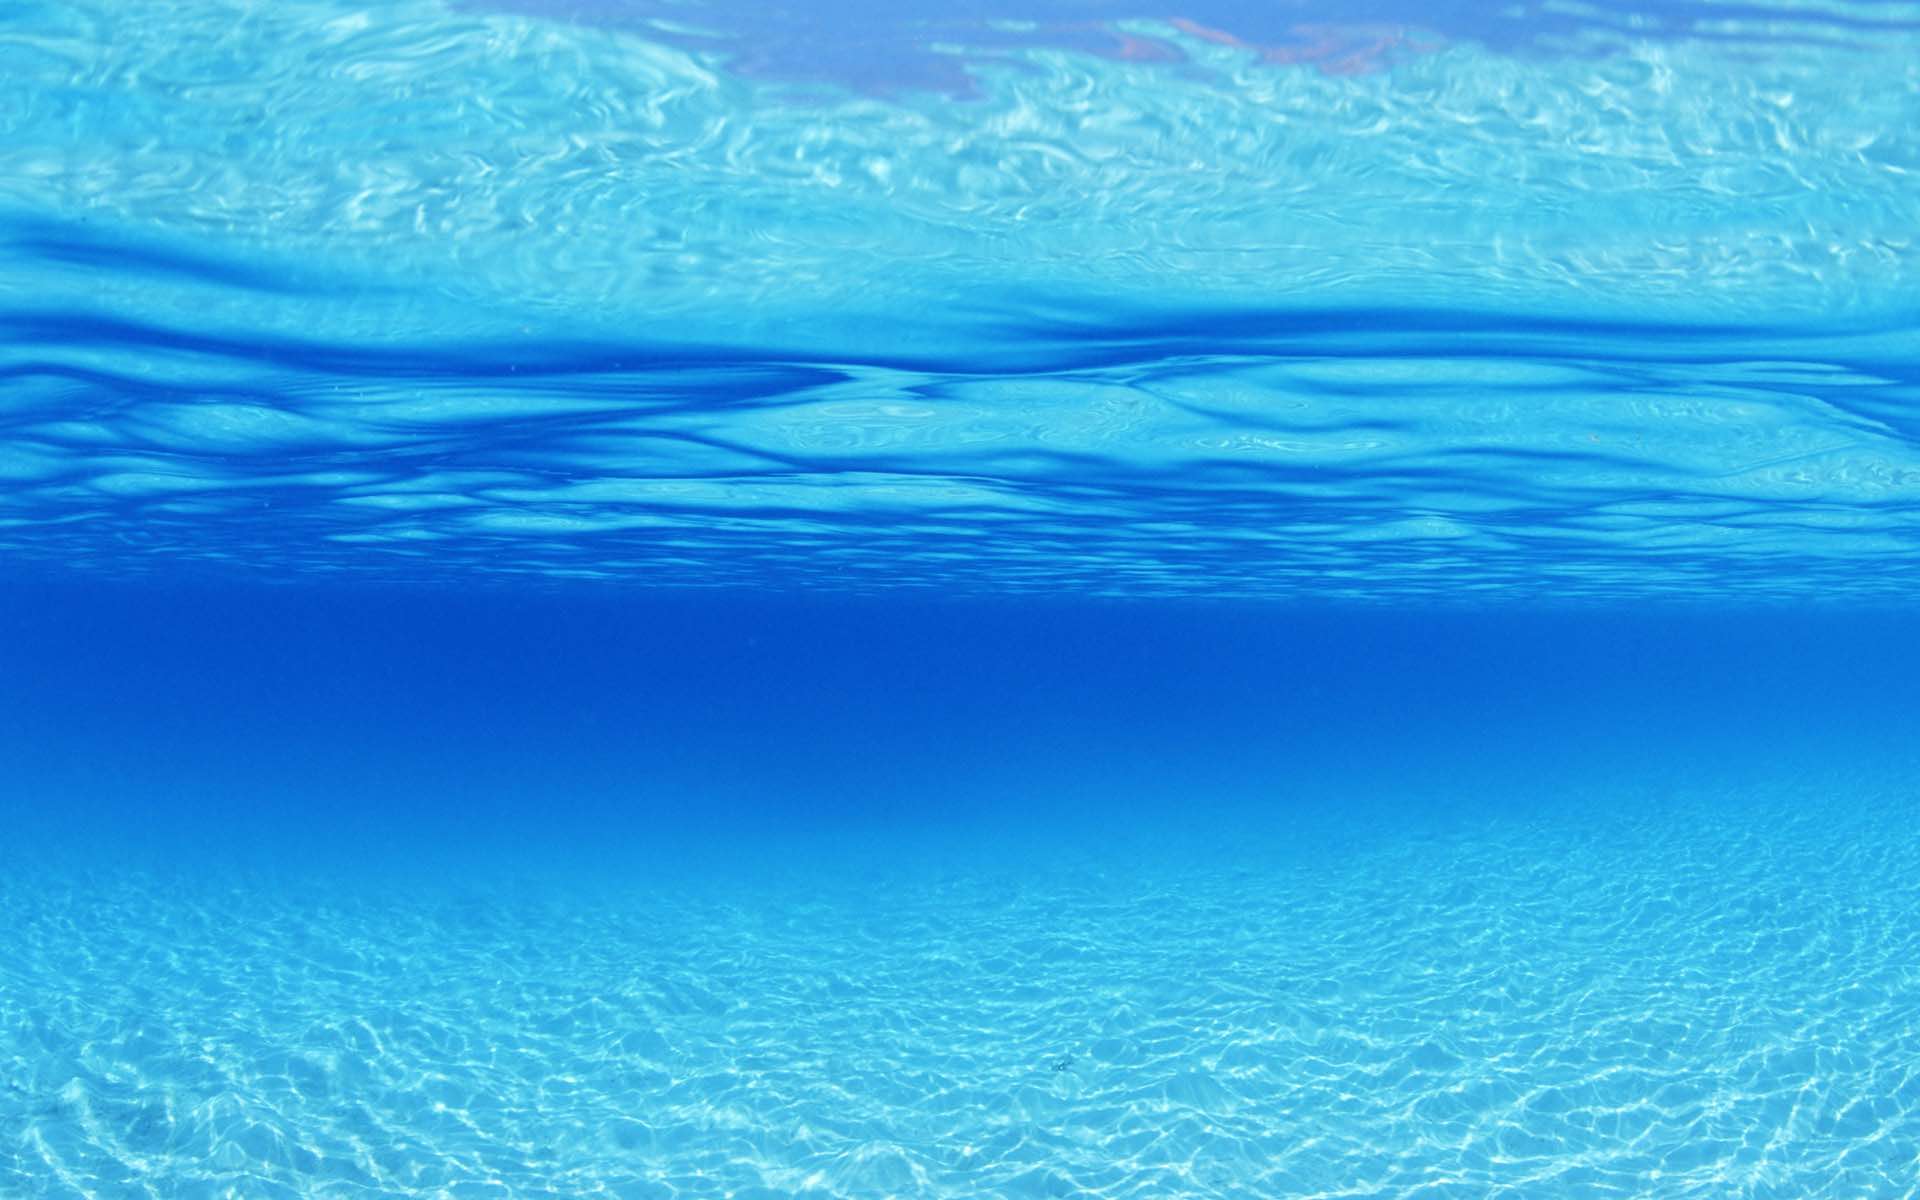 Jenkins makes a UX splash with Blue Ocean